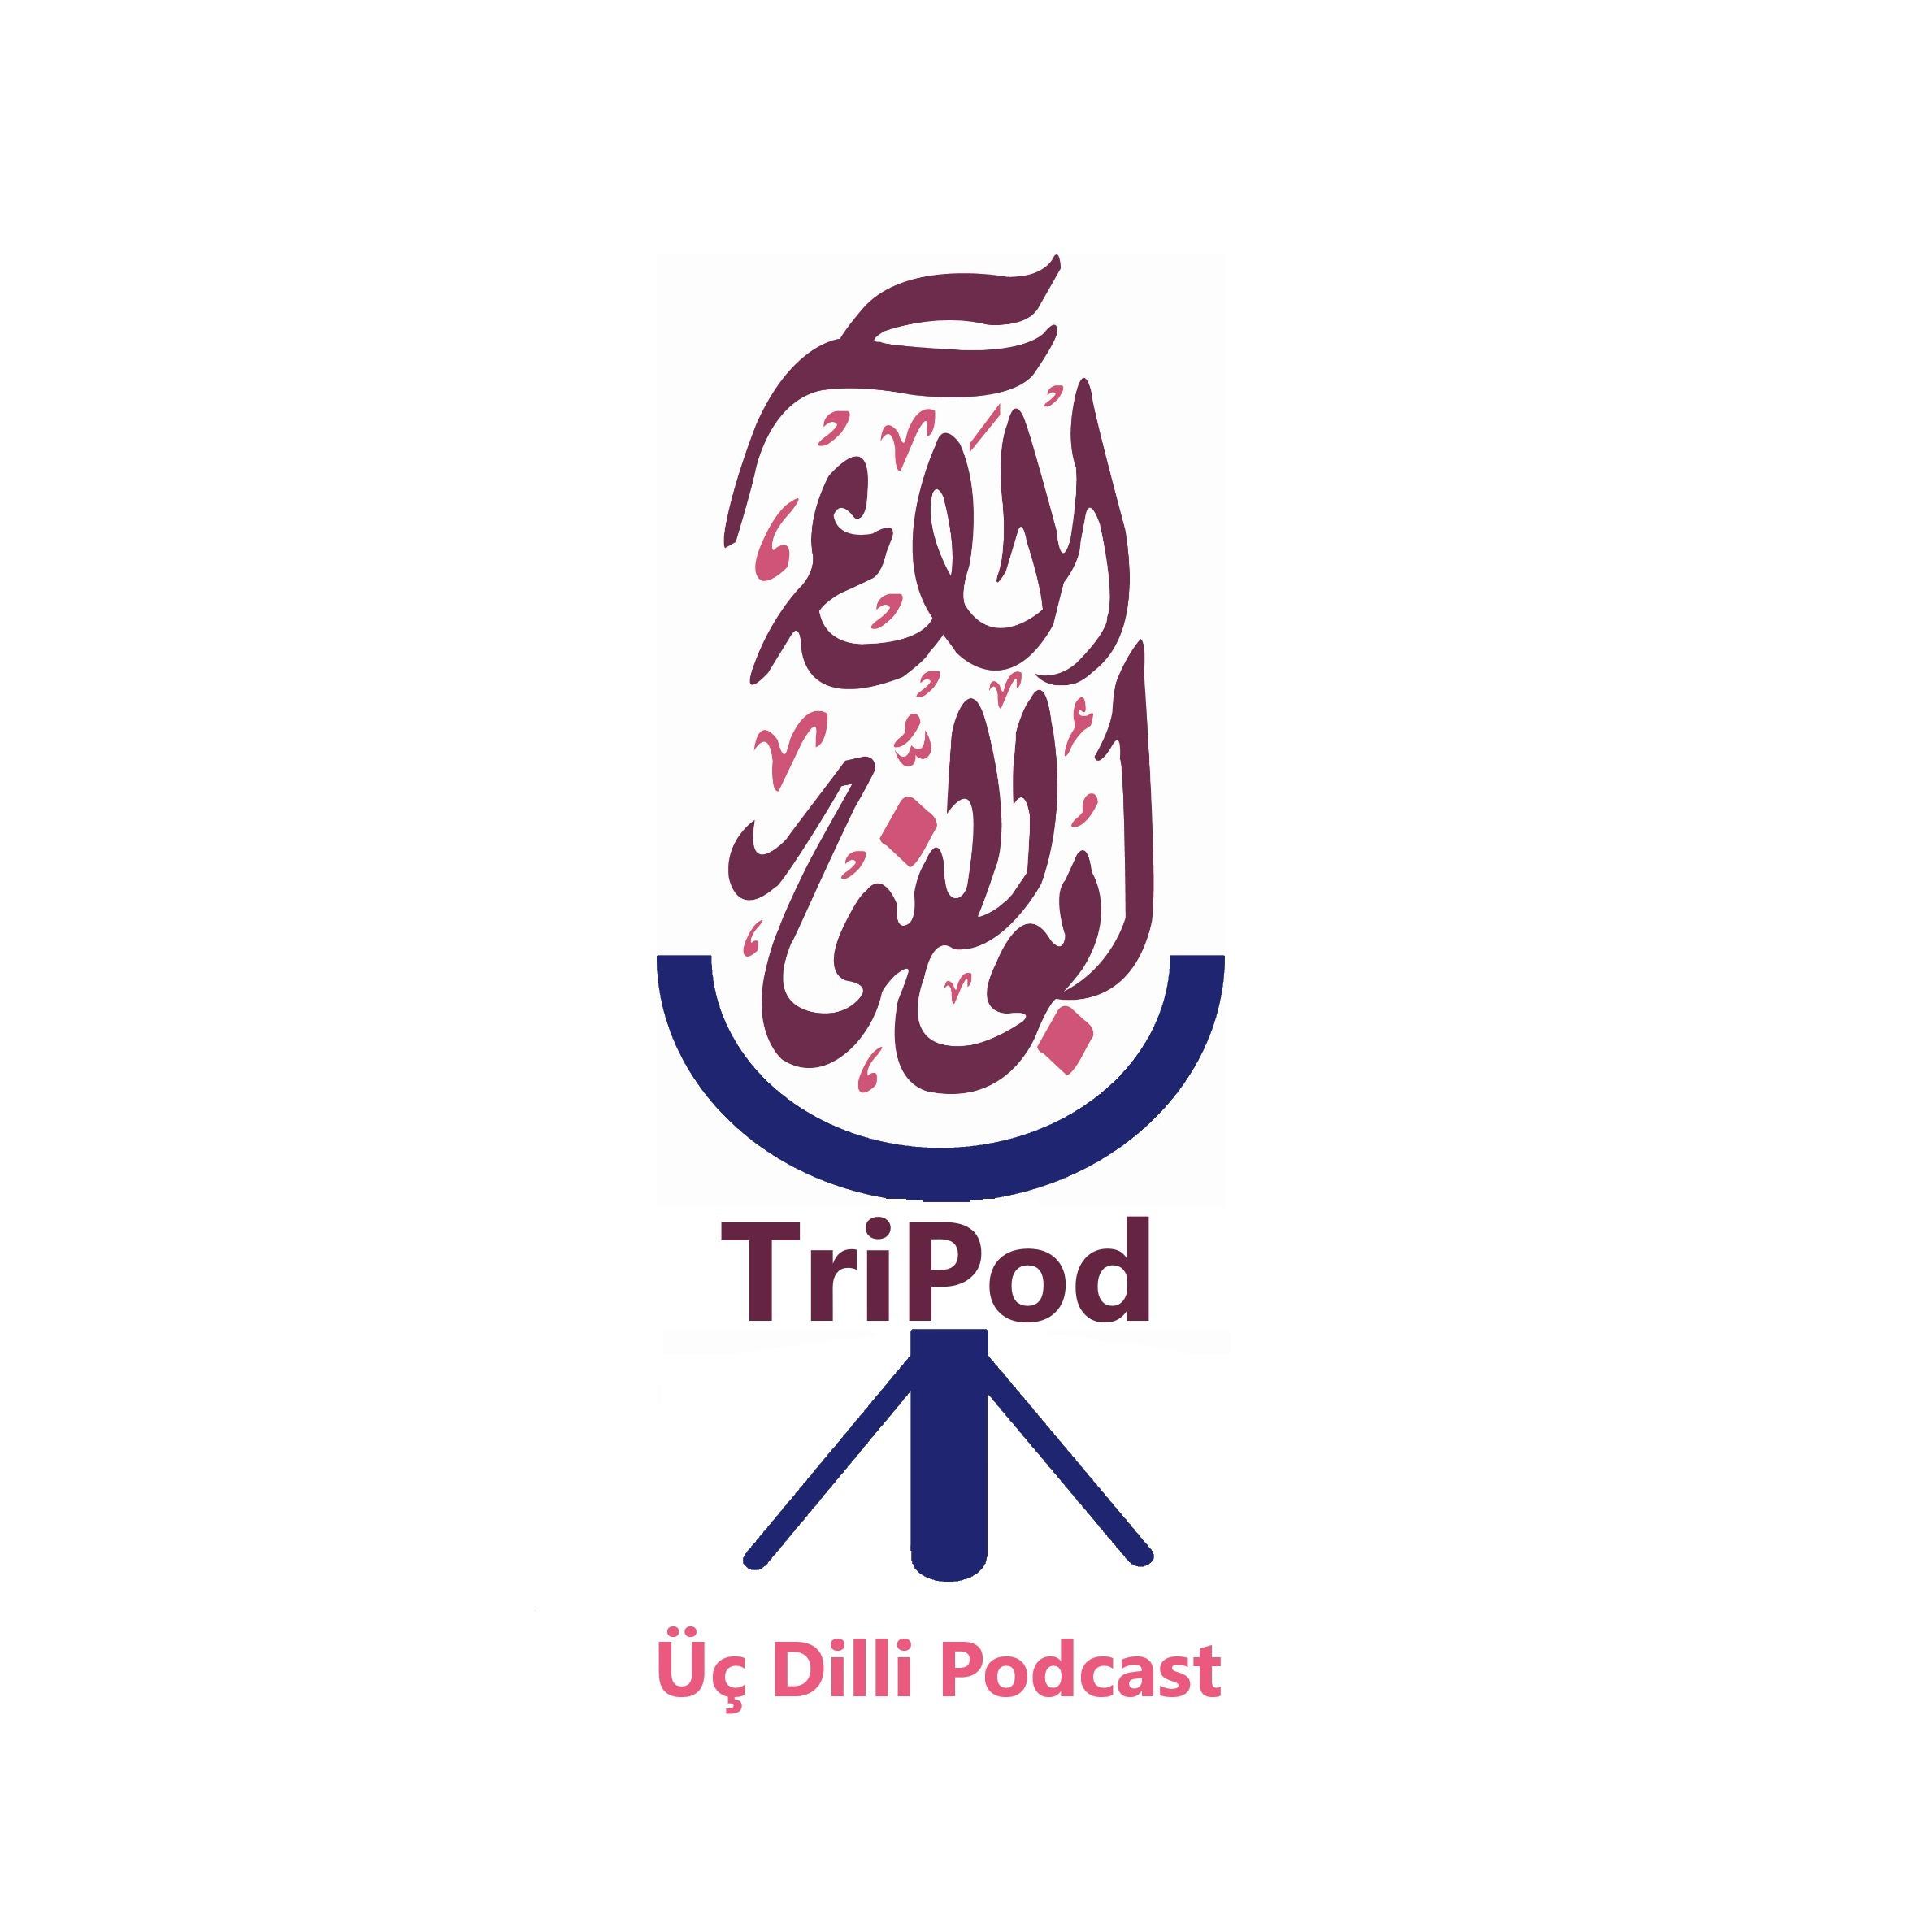 TriPod - Üç Dilli Podcast